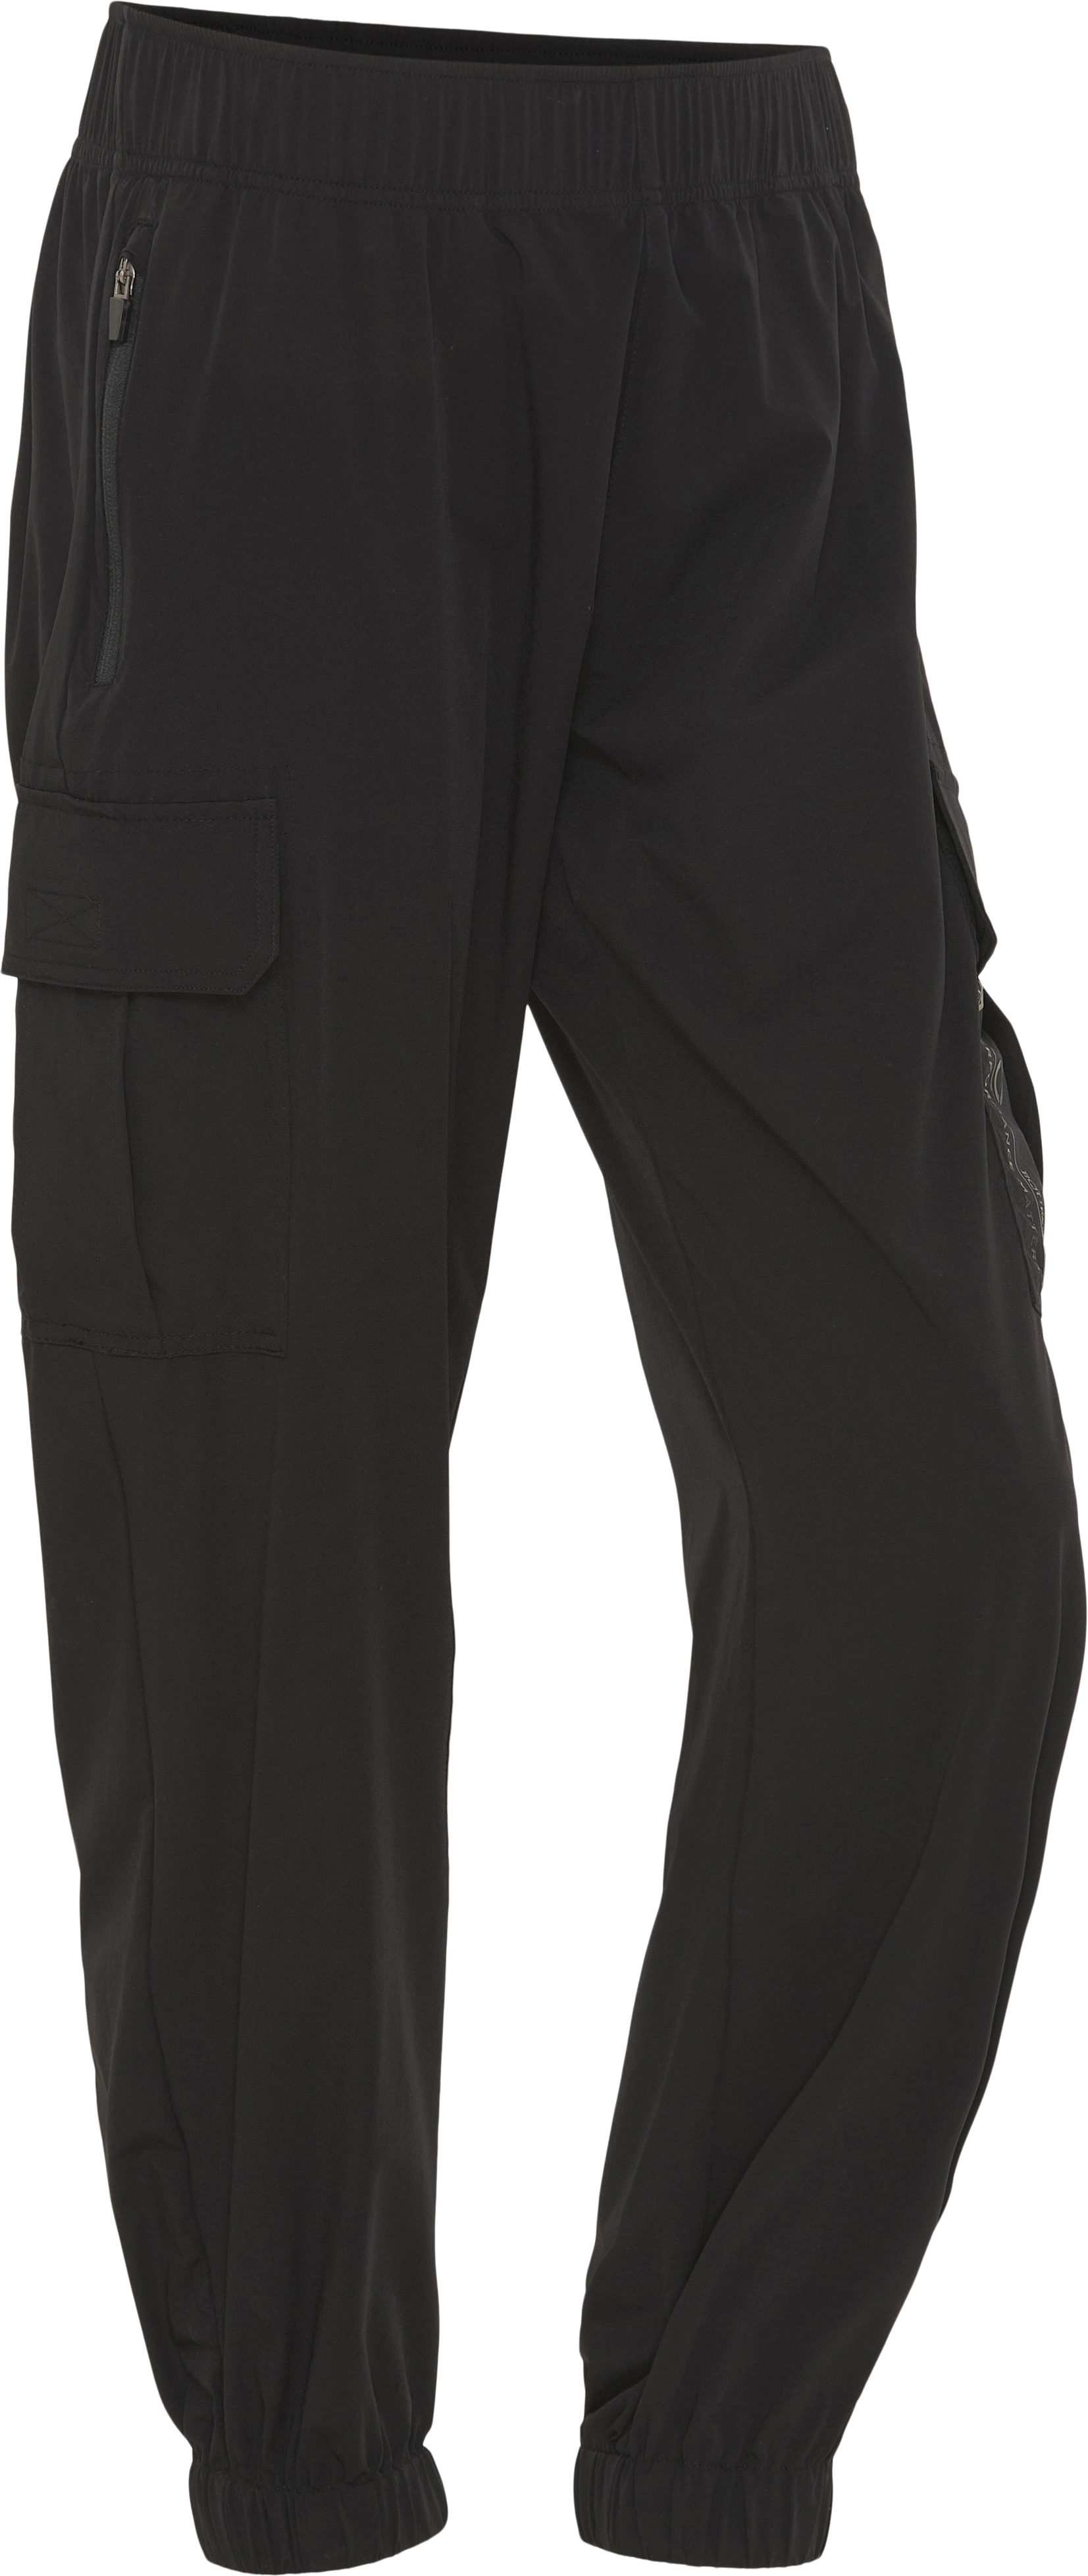 CATAGO Unisex Neve Sports Pants - Black (XL), Catago